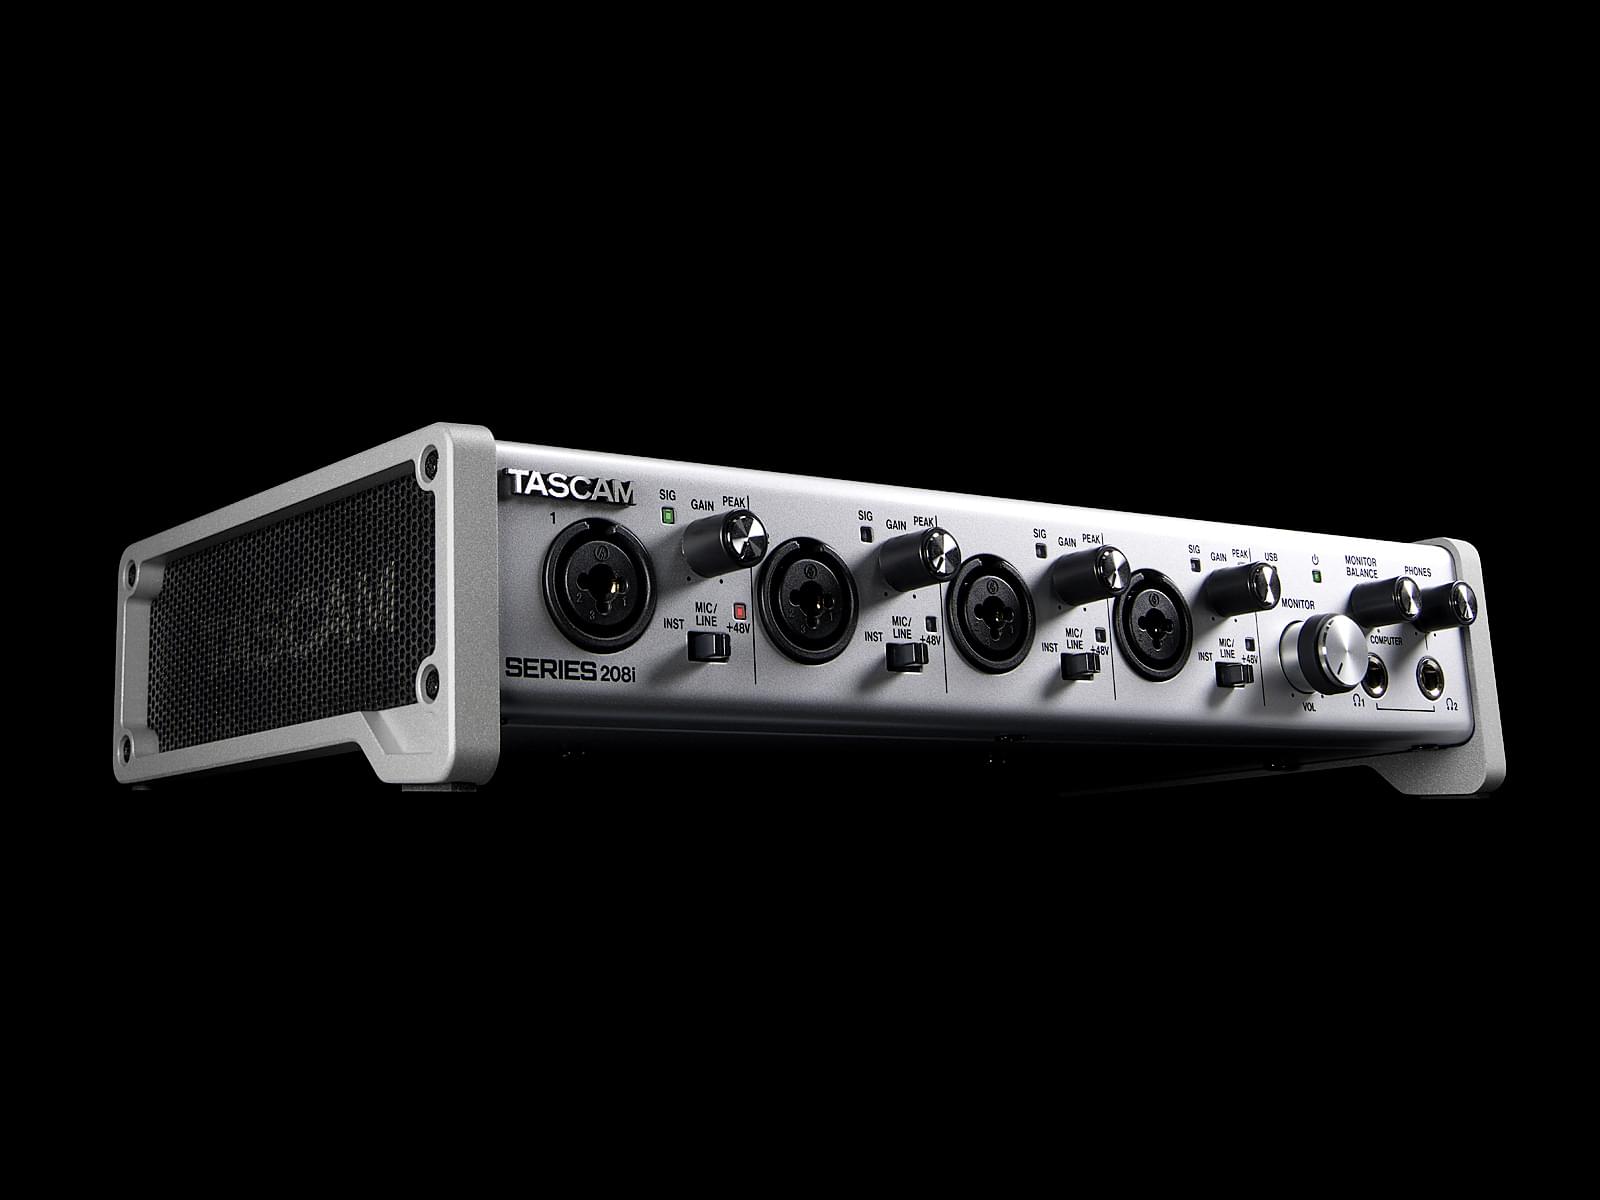 6ft MIDI Cable XLR-XLR & XLR-TRS Cable Bundle Tascam SERIES 208i USB Audio/MIDI Interface with R100 Stereo Headphones 